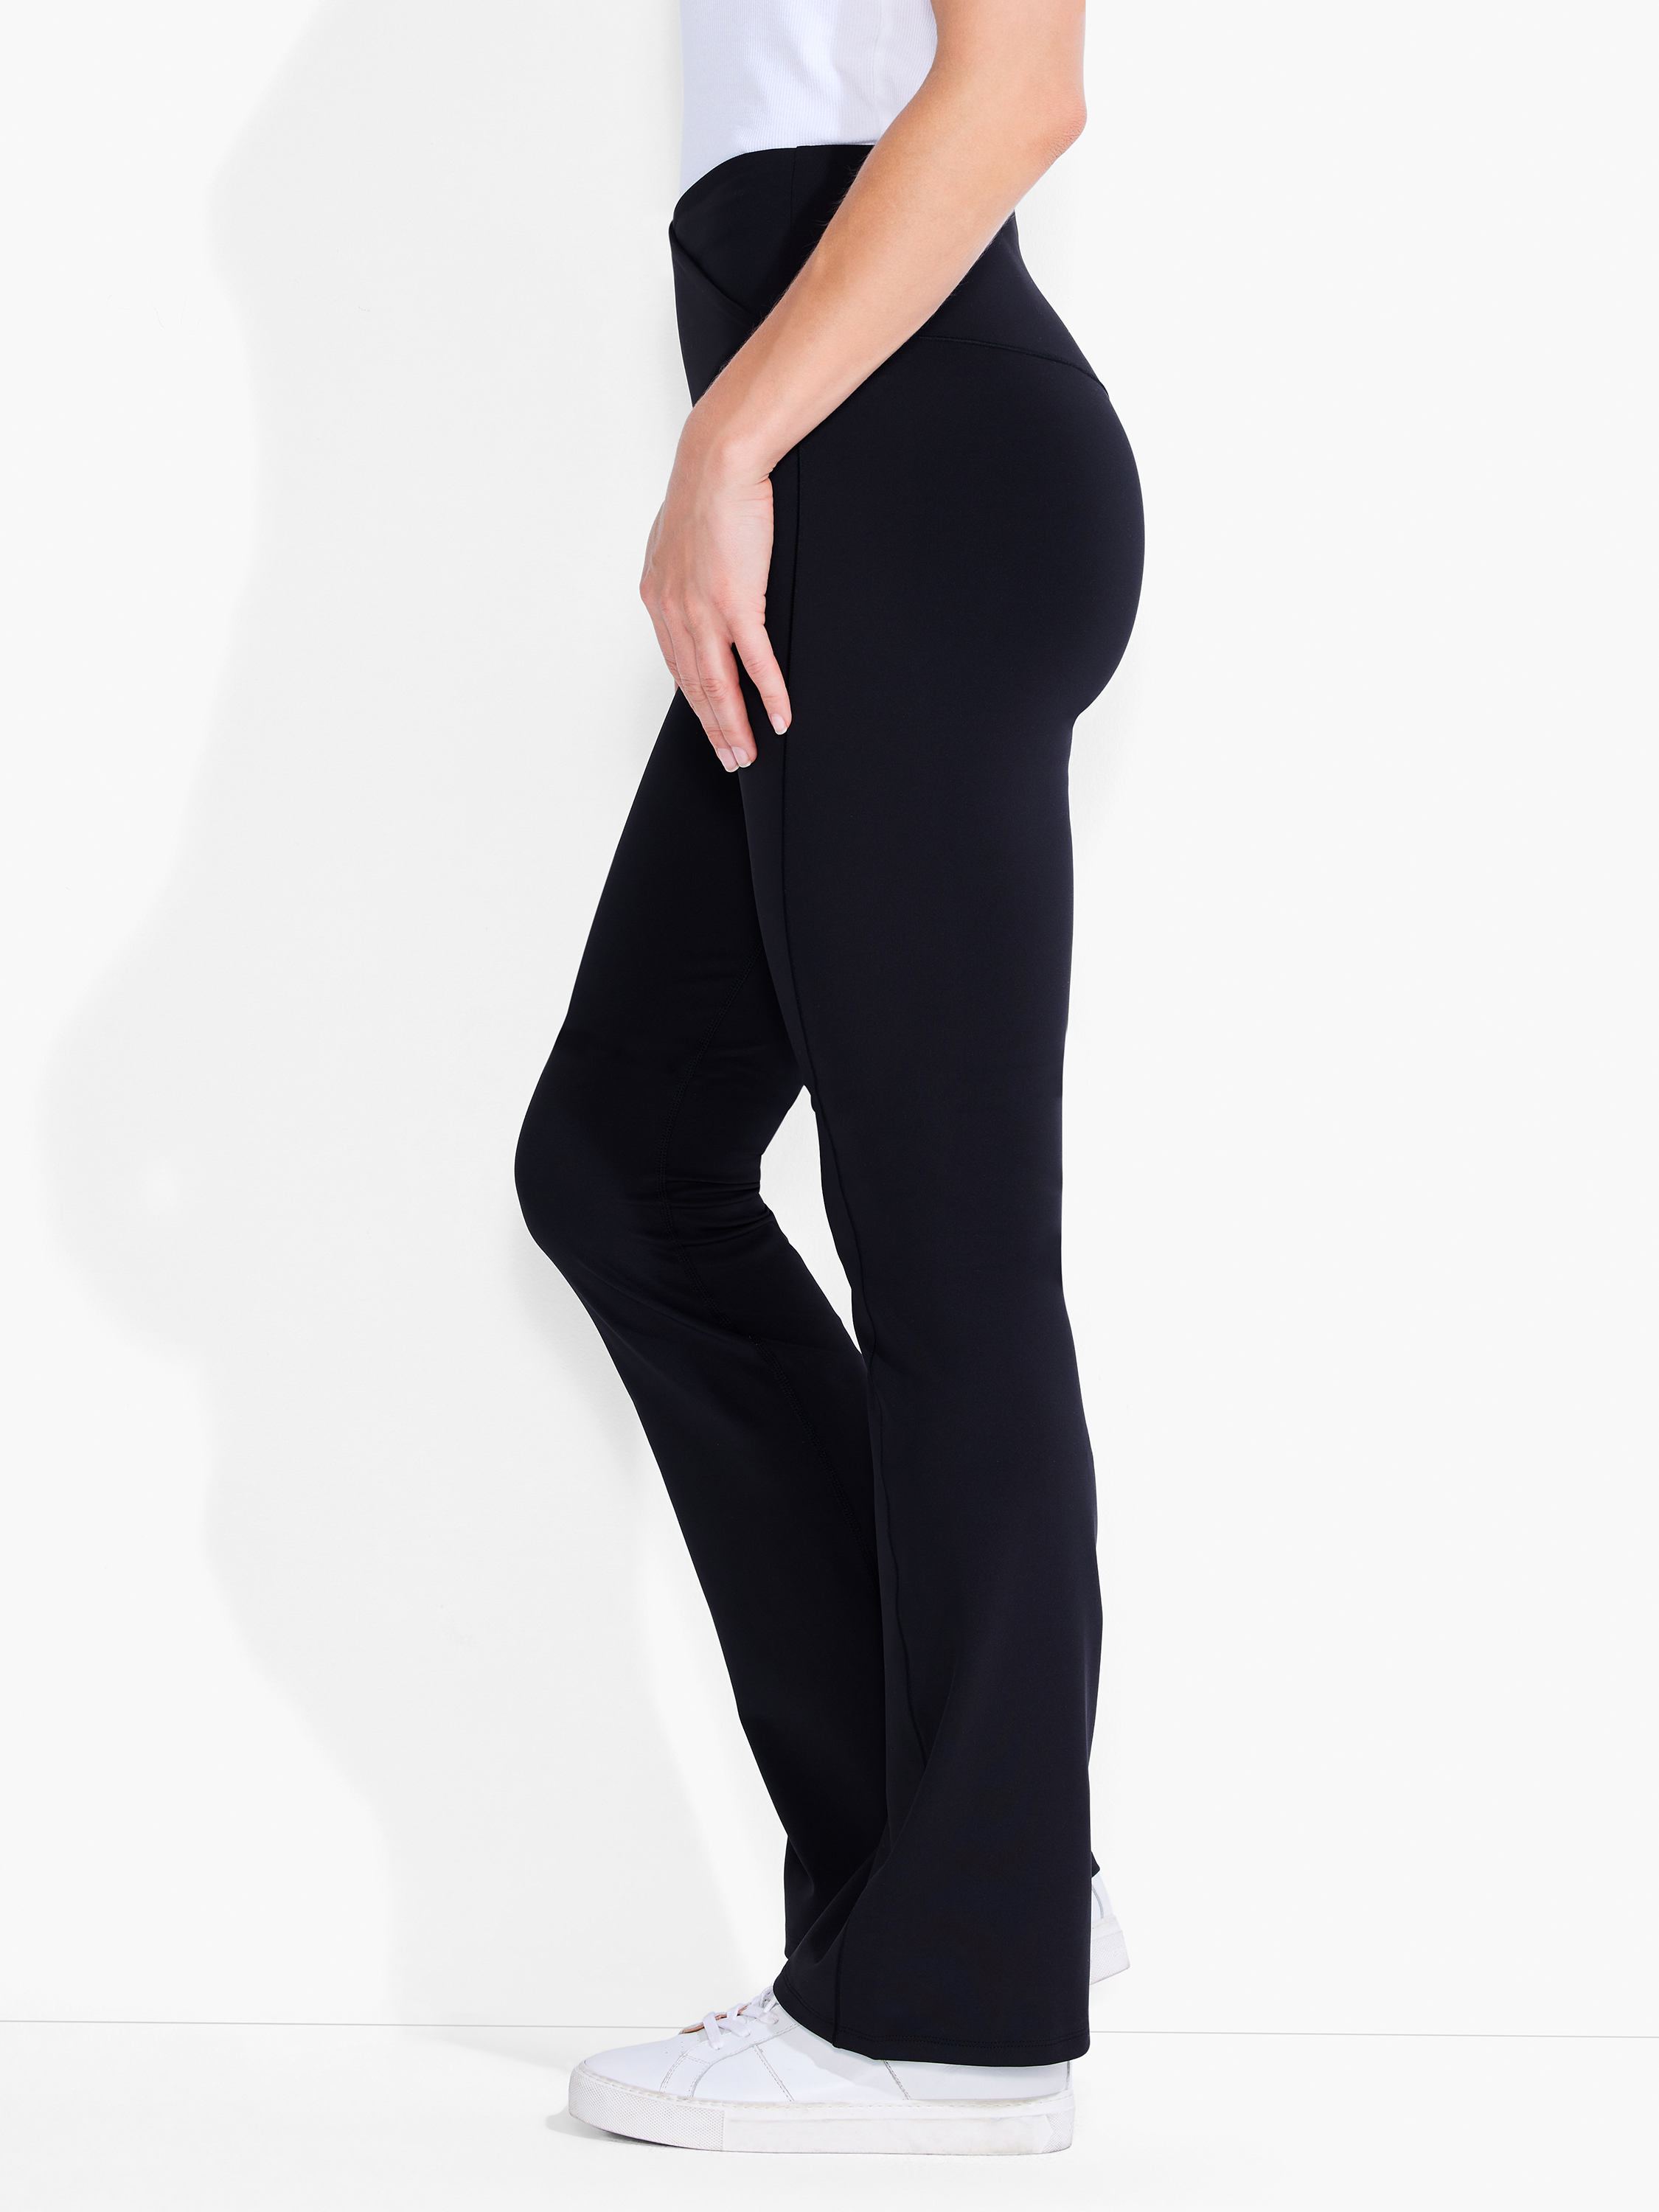 Onyx Fold Over Waist Yoga Pants/high Waisted Black Yoga Pants